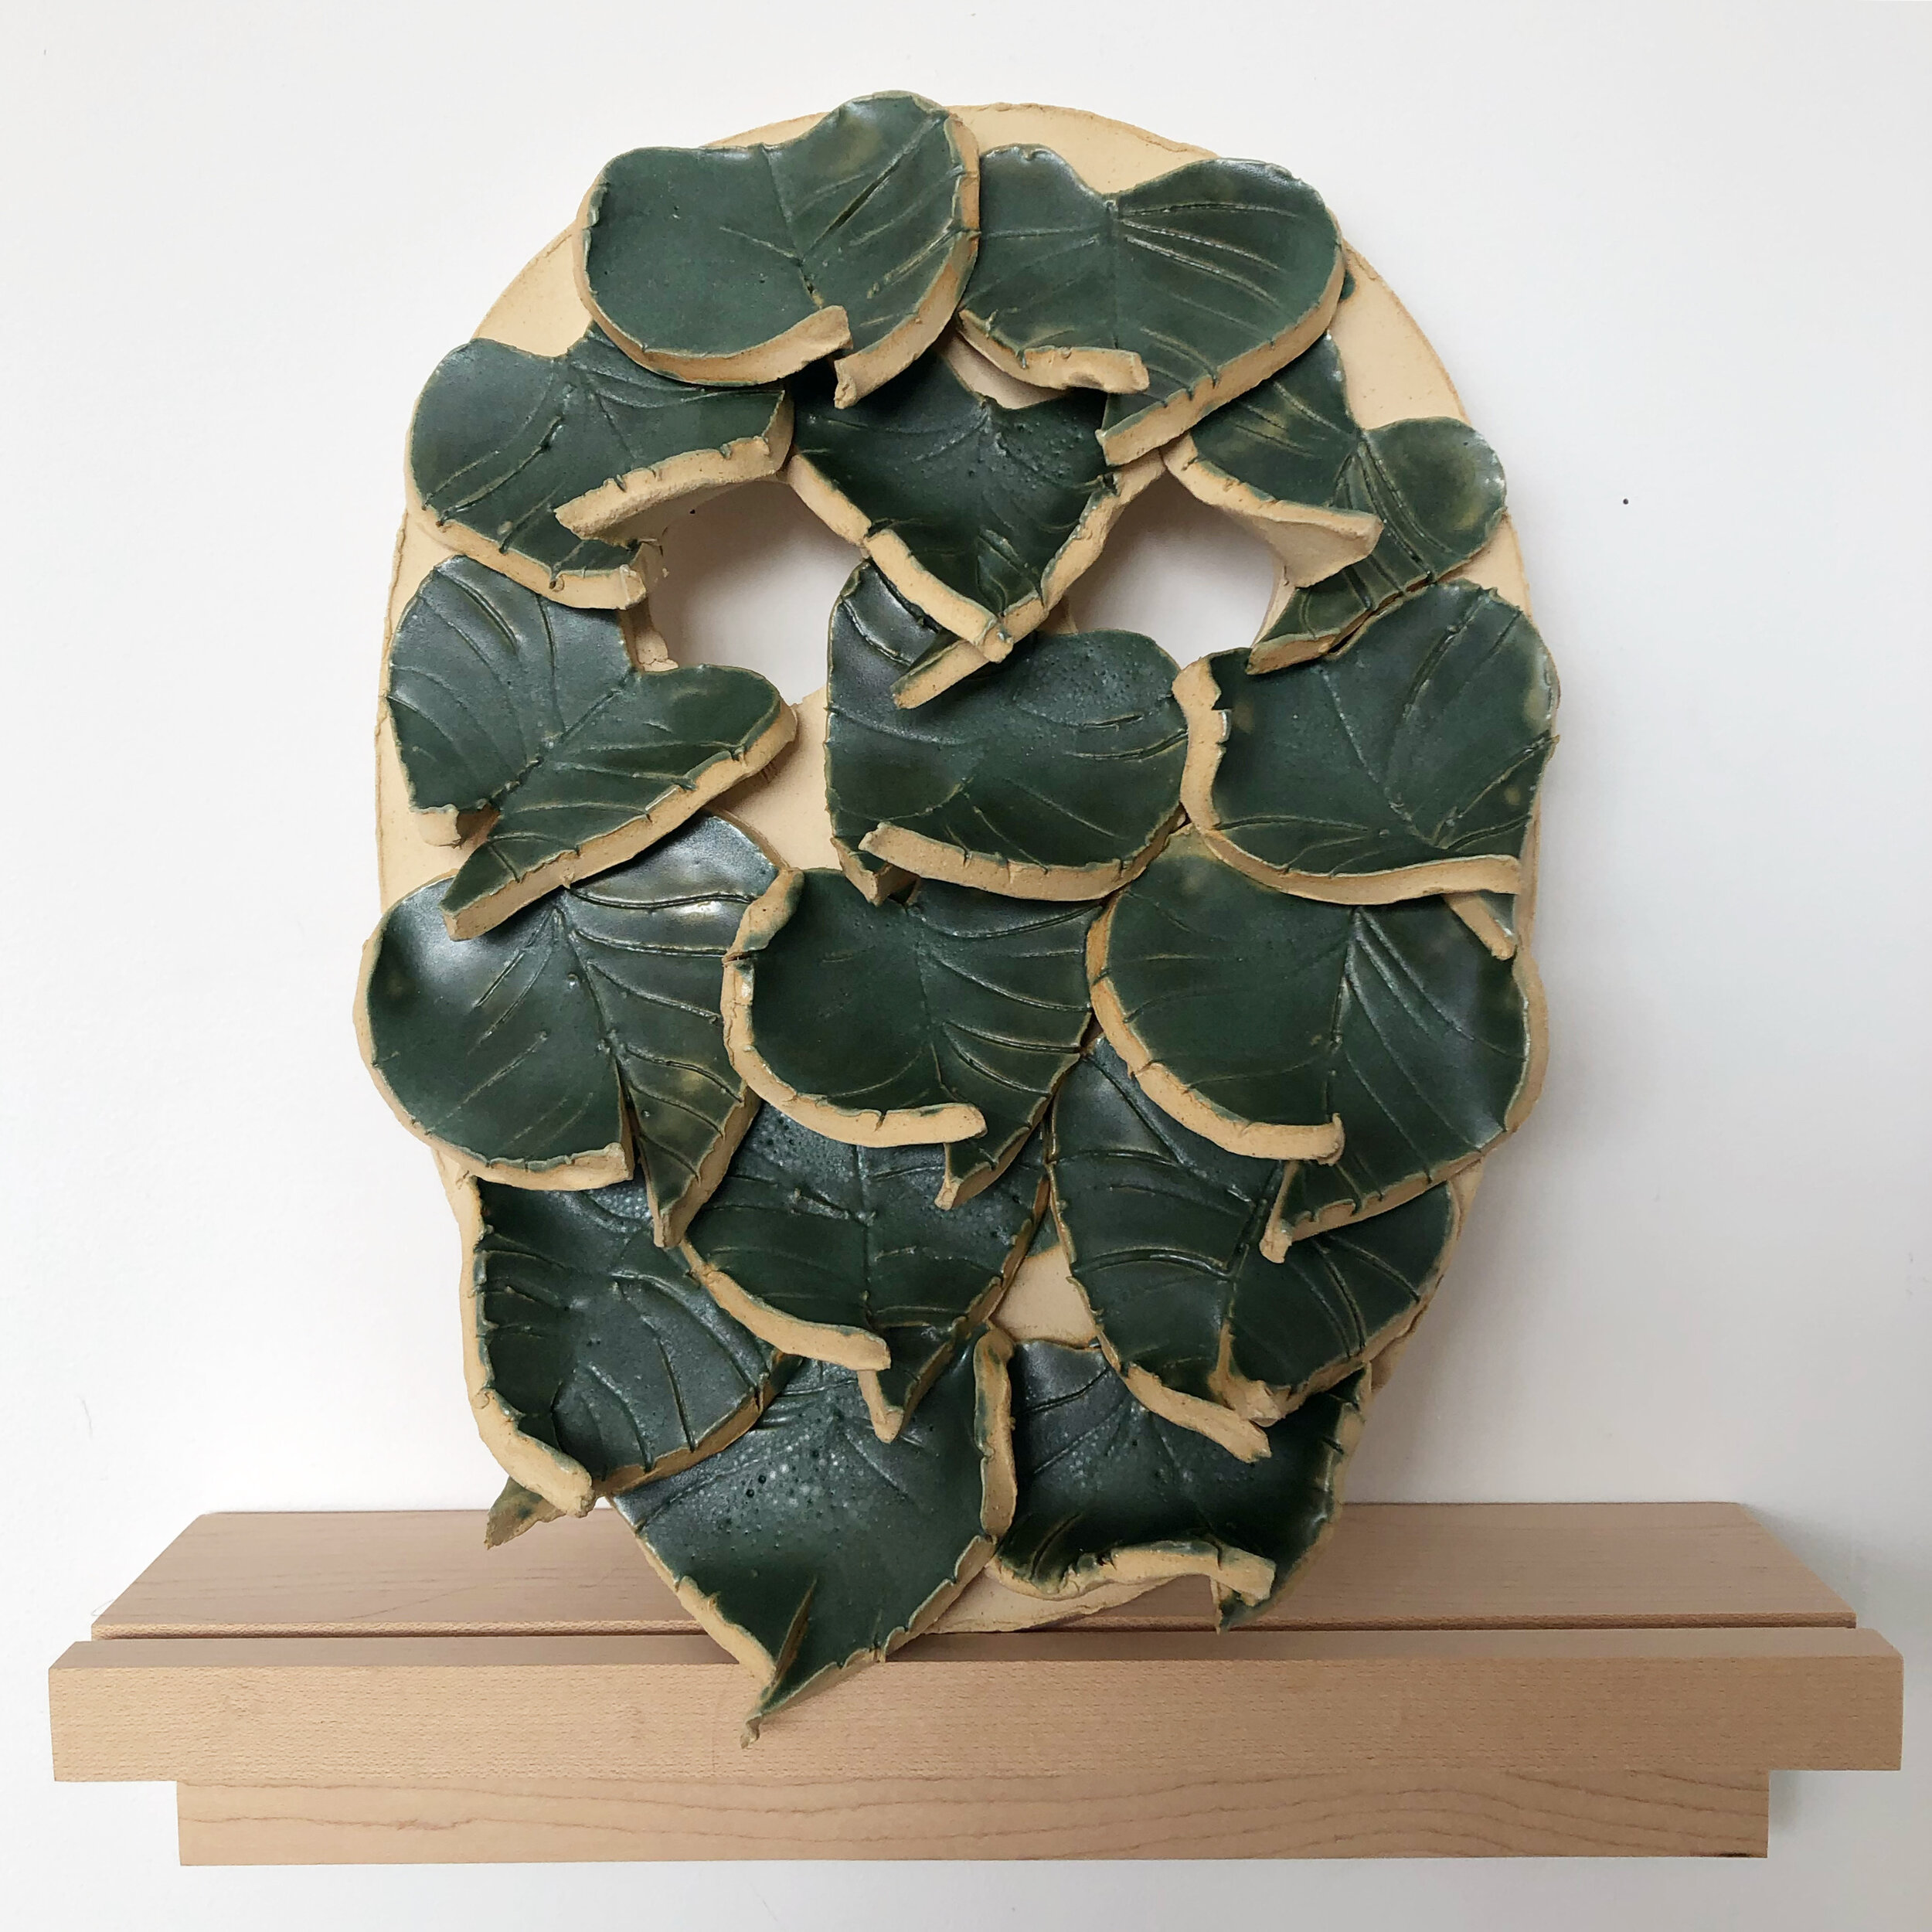 Mask with Leaves, 2020, glazed ceramic, 11 1/2 x 8 1/2 x 1 1/2"